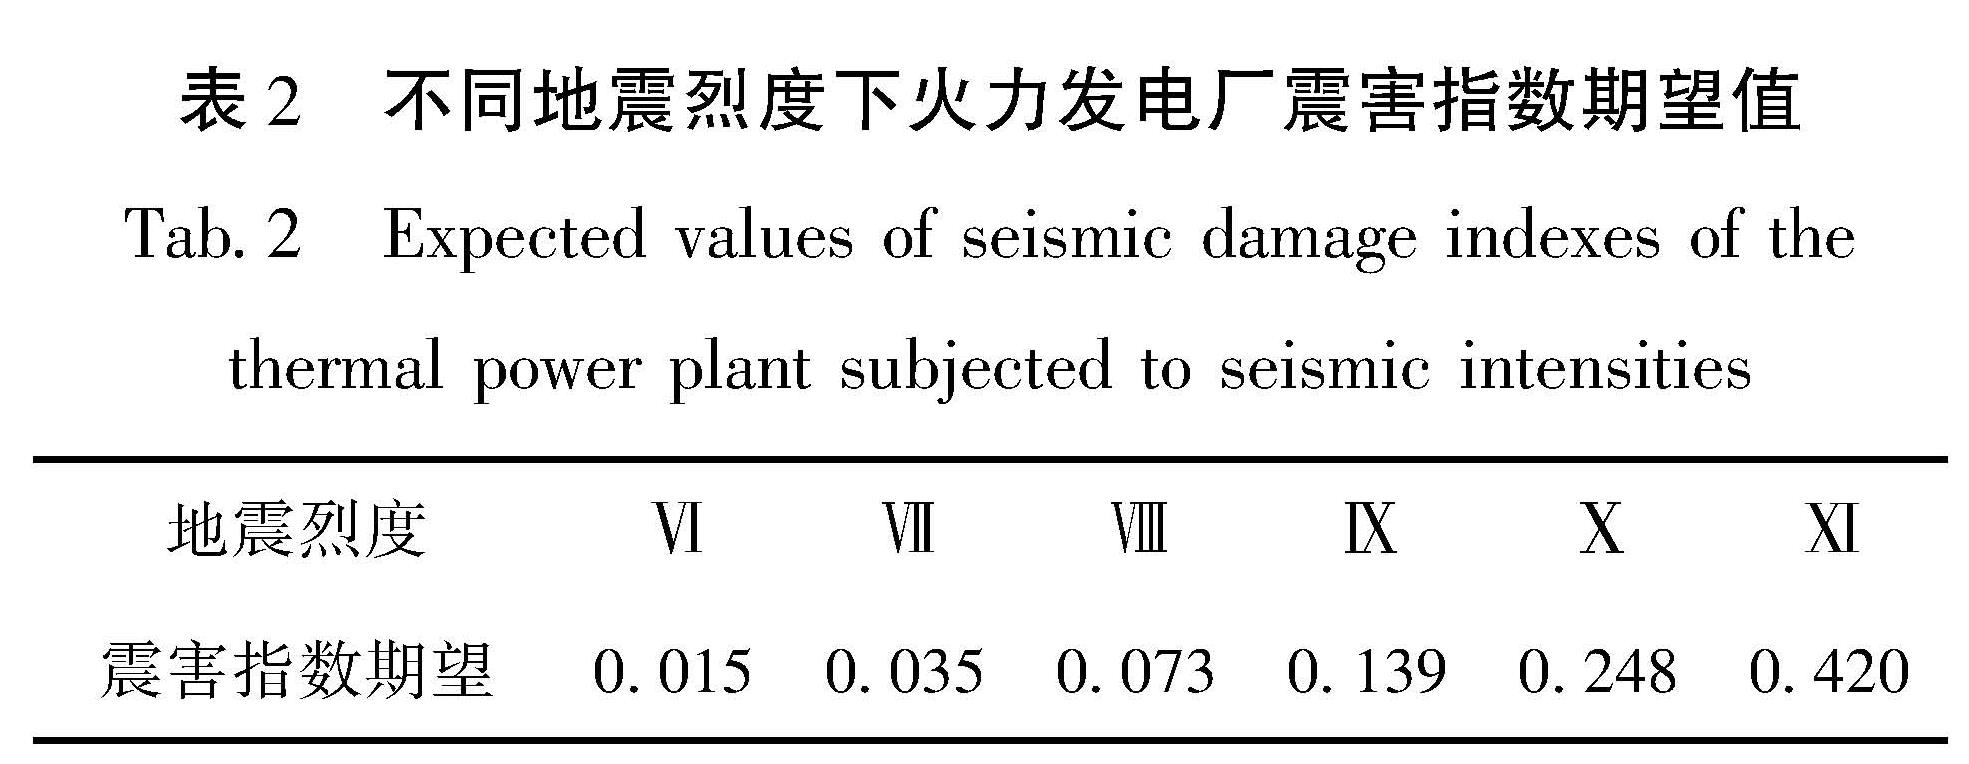 表2 不同地震烈度下火力发电厂震害指数期望值<br/>Tab.2 Expected values of seismic damage indexes of the thermal power plant subjected to seismic intensities